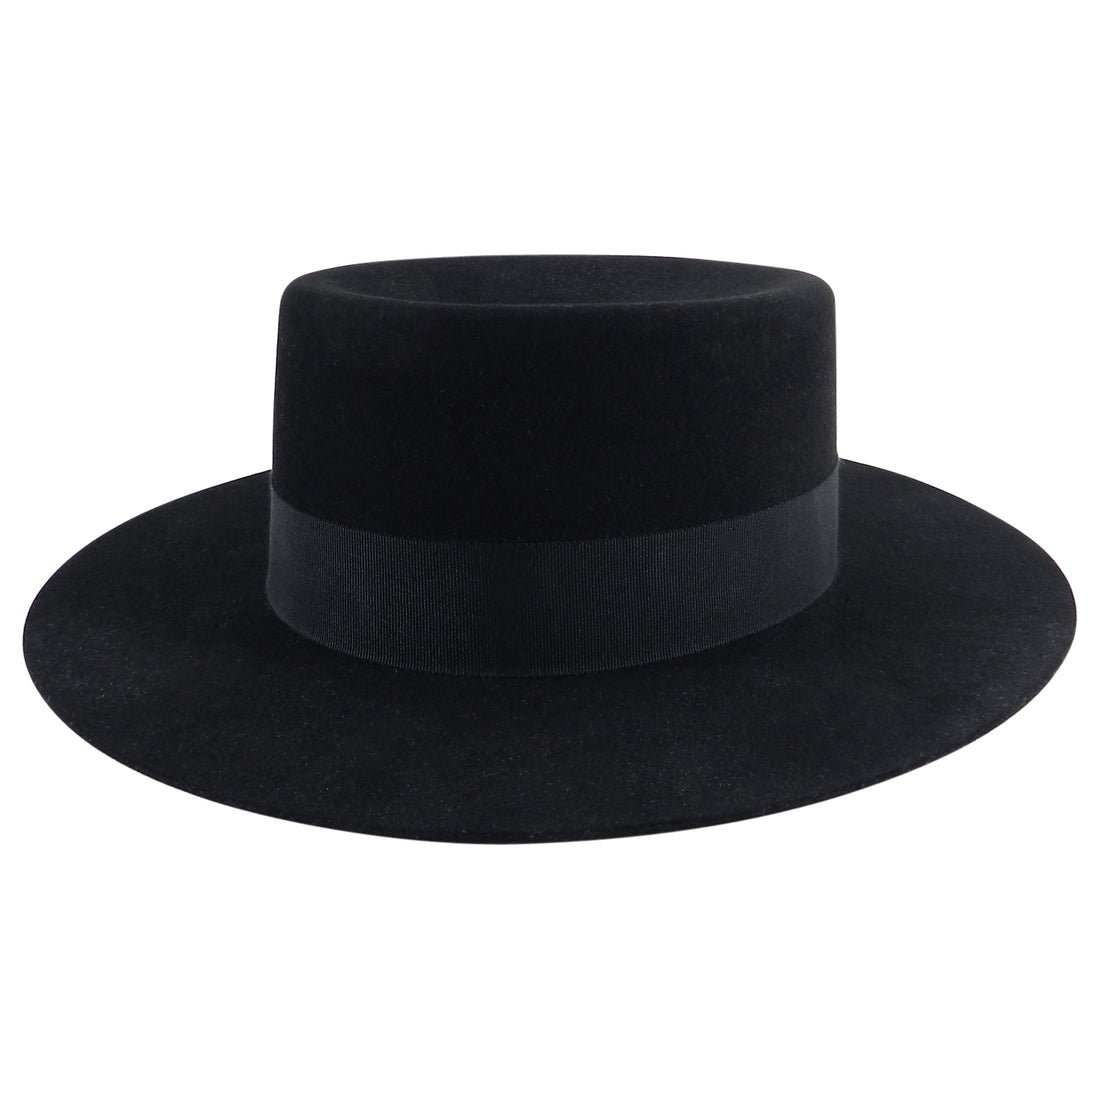 YSL Saint Laurent Spring 2015 Runway Black Felt Hat